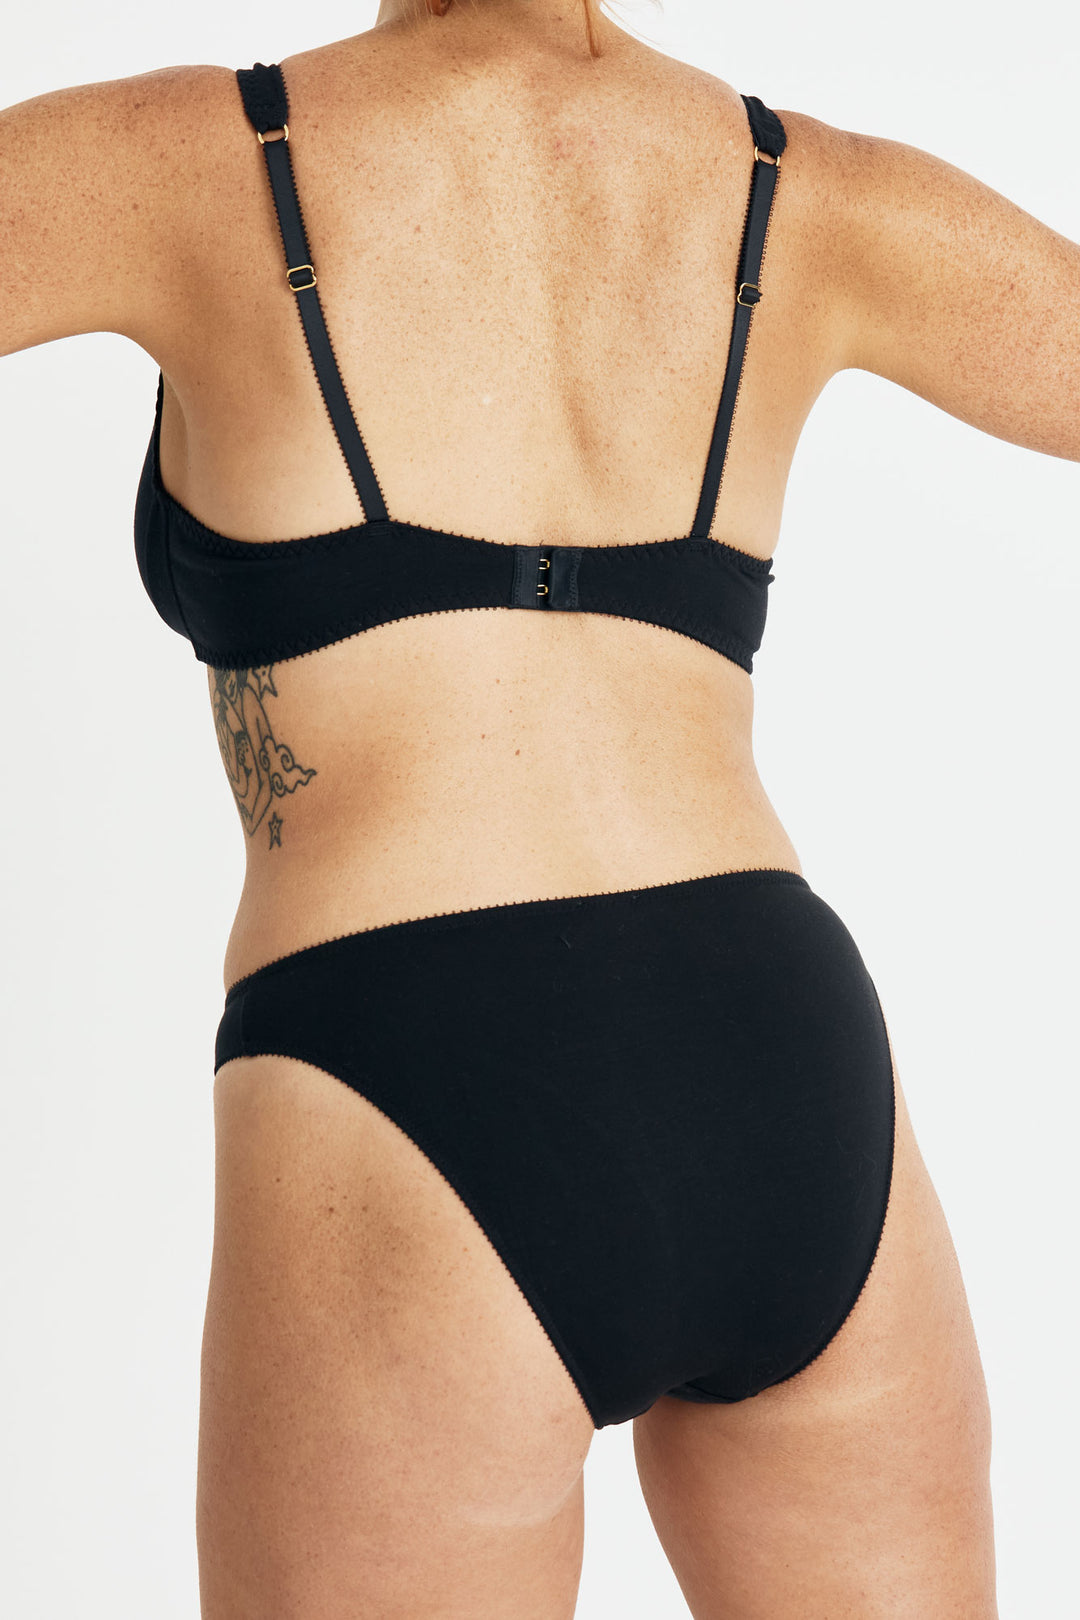 Videris Lingerie bikini knicker in black TENCEL™  mid-rise style with cheeky bottom coverage